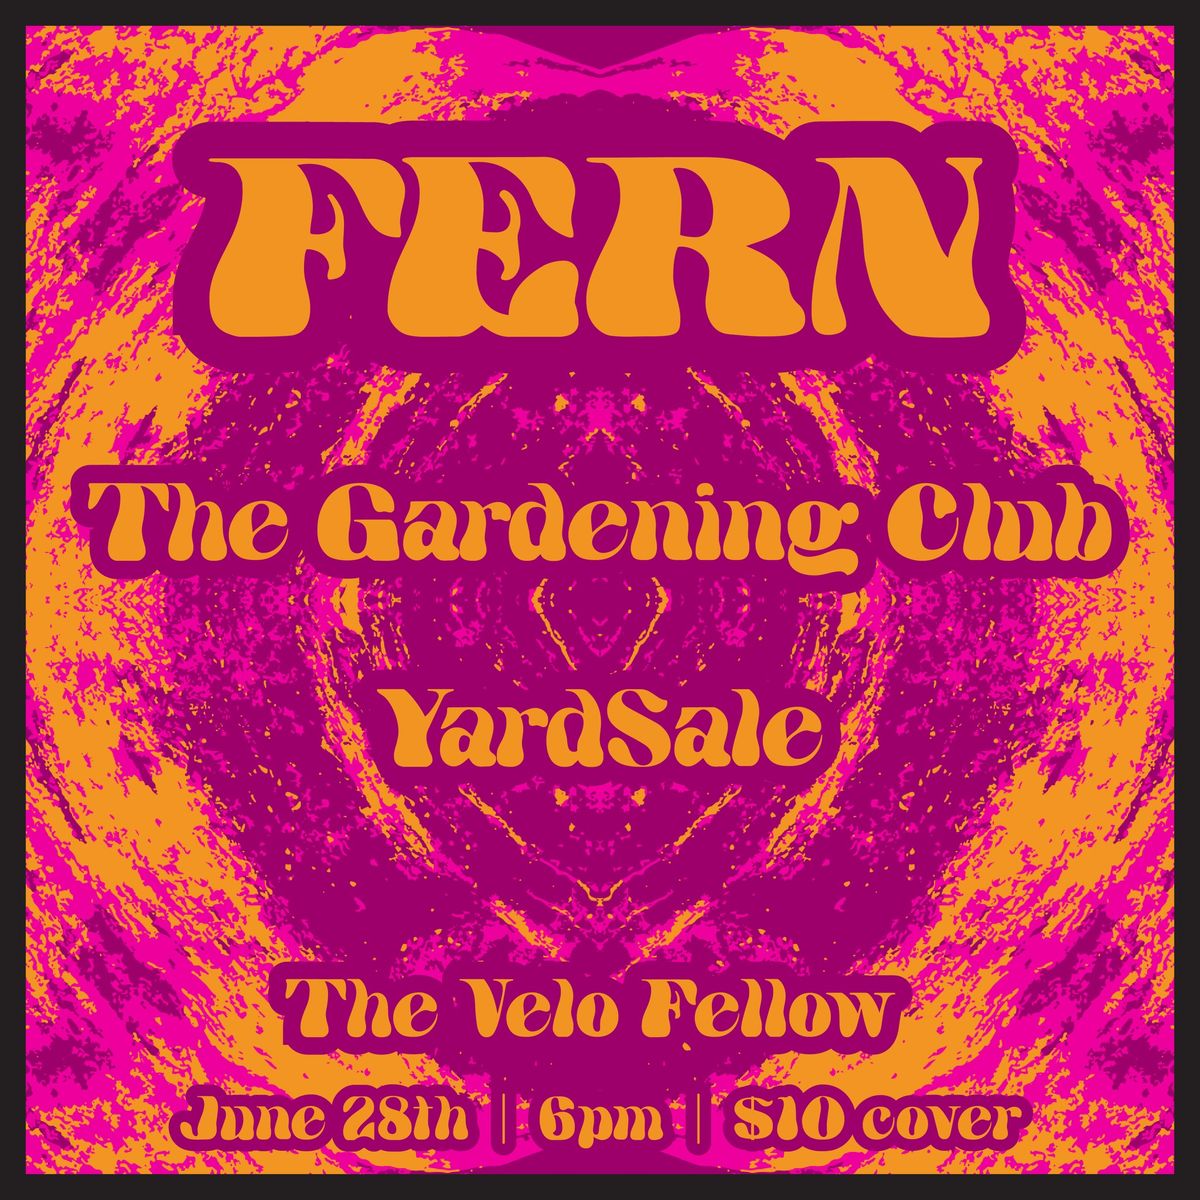 Fern, Gardening Club, and Yard Sale @ The Velo Fellow